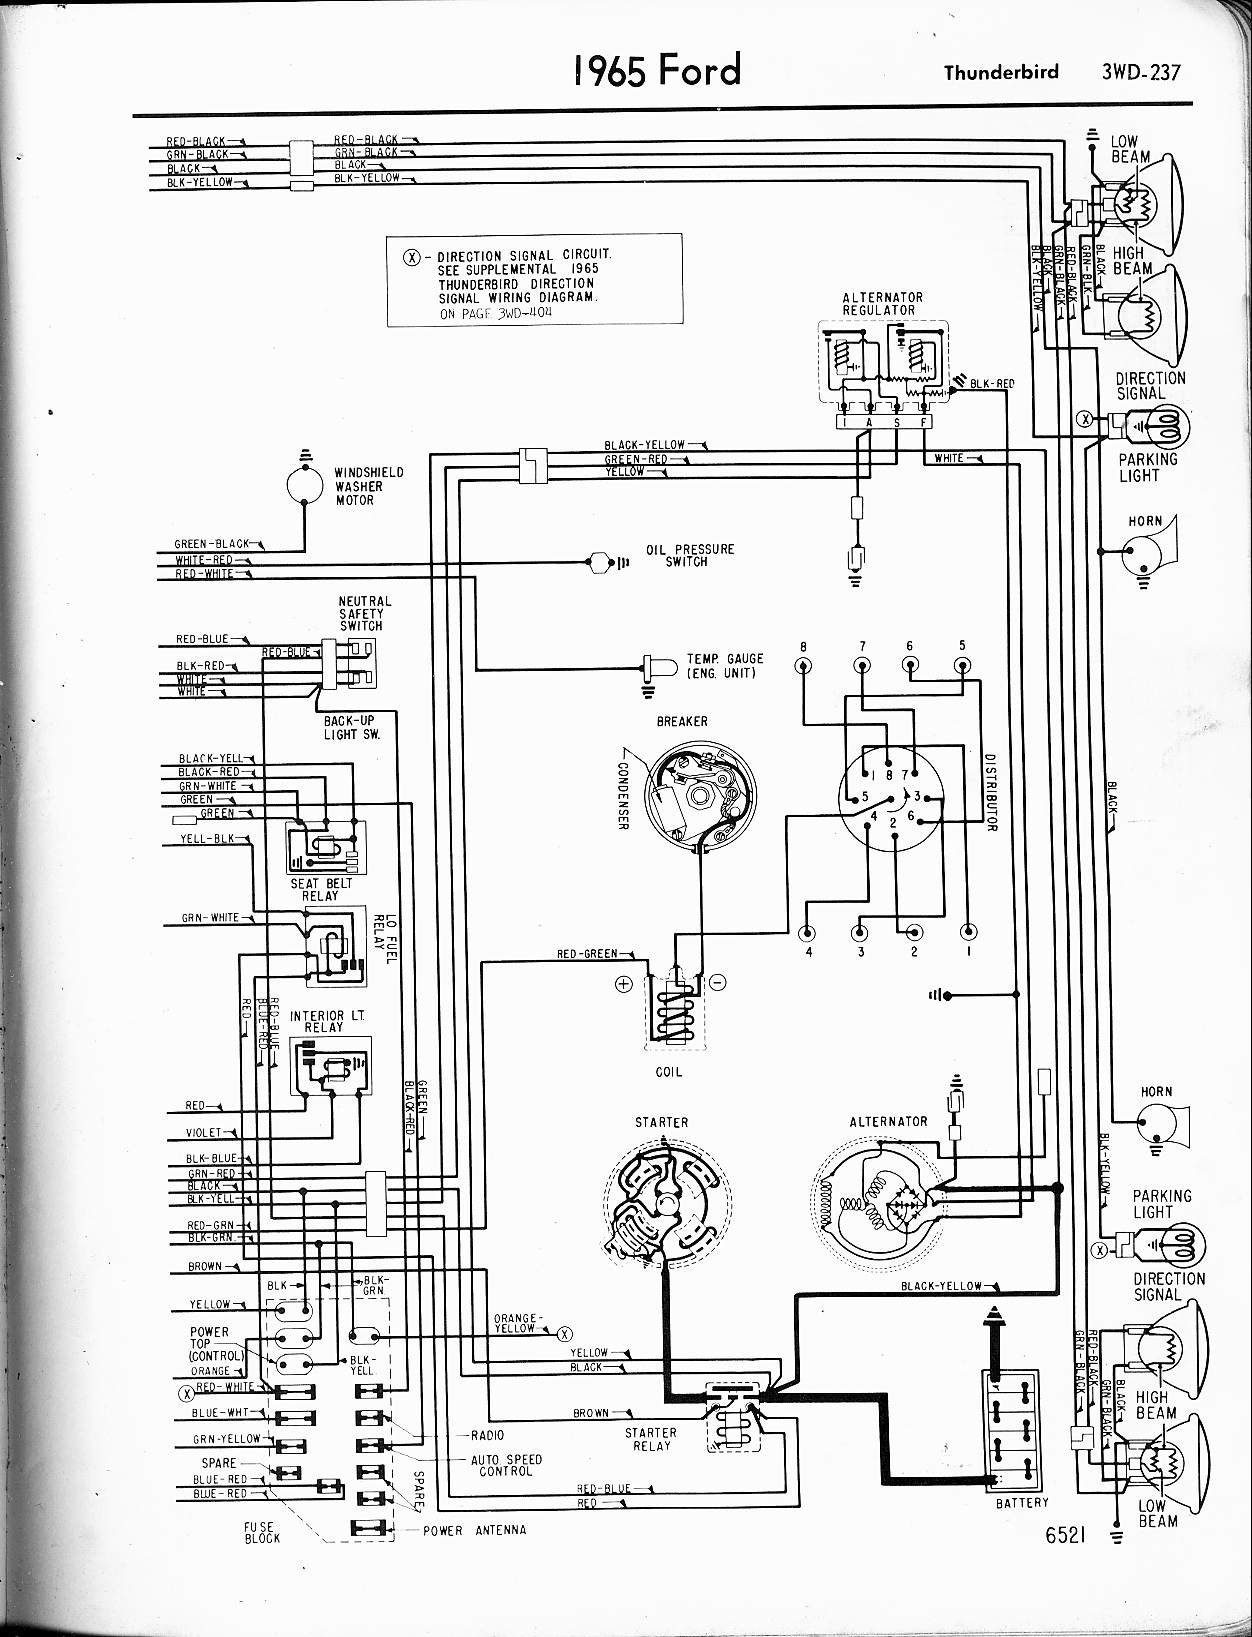 Harley Davidson Voltage Regulator Wiring Diagram Wiring Diagram Bladderdiagrams Maslahi In